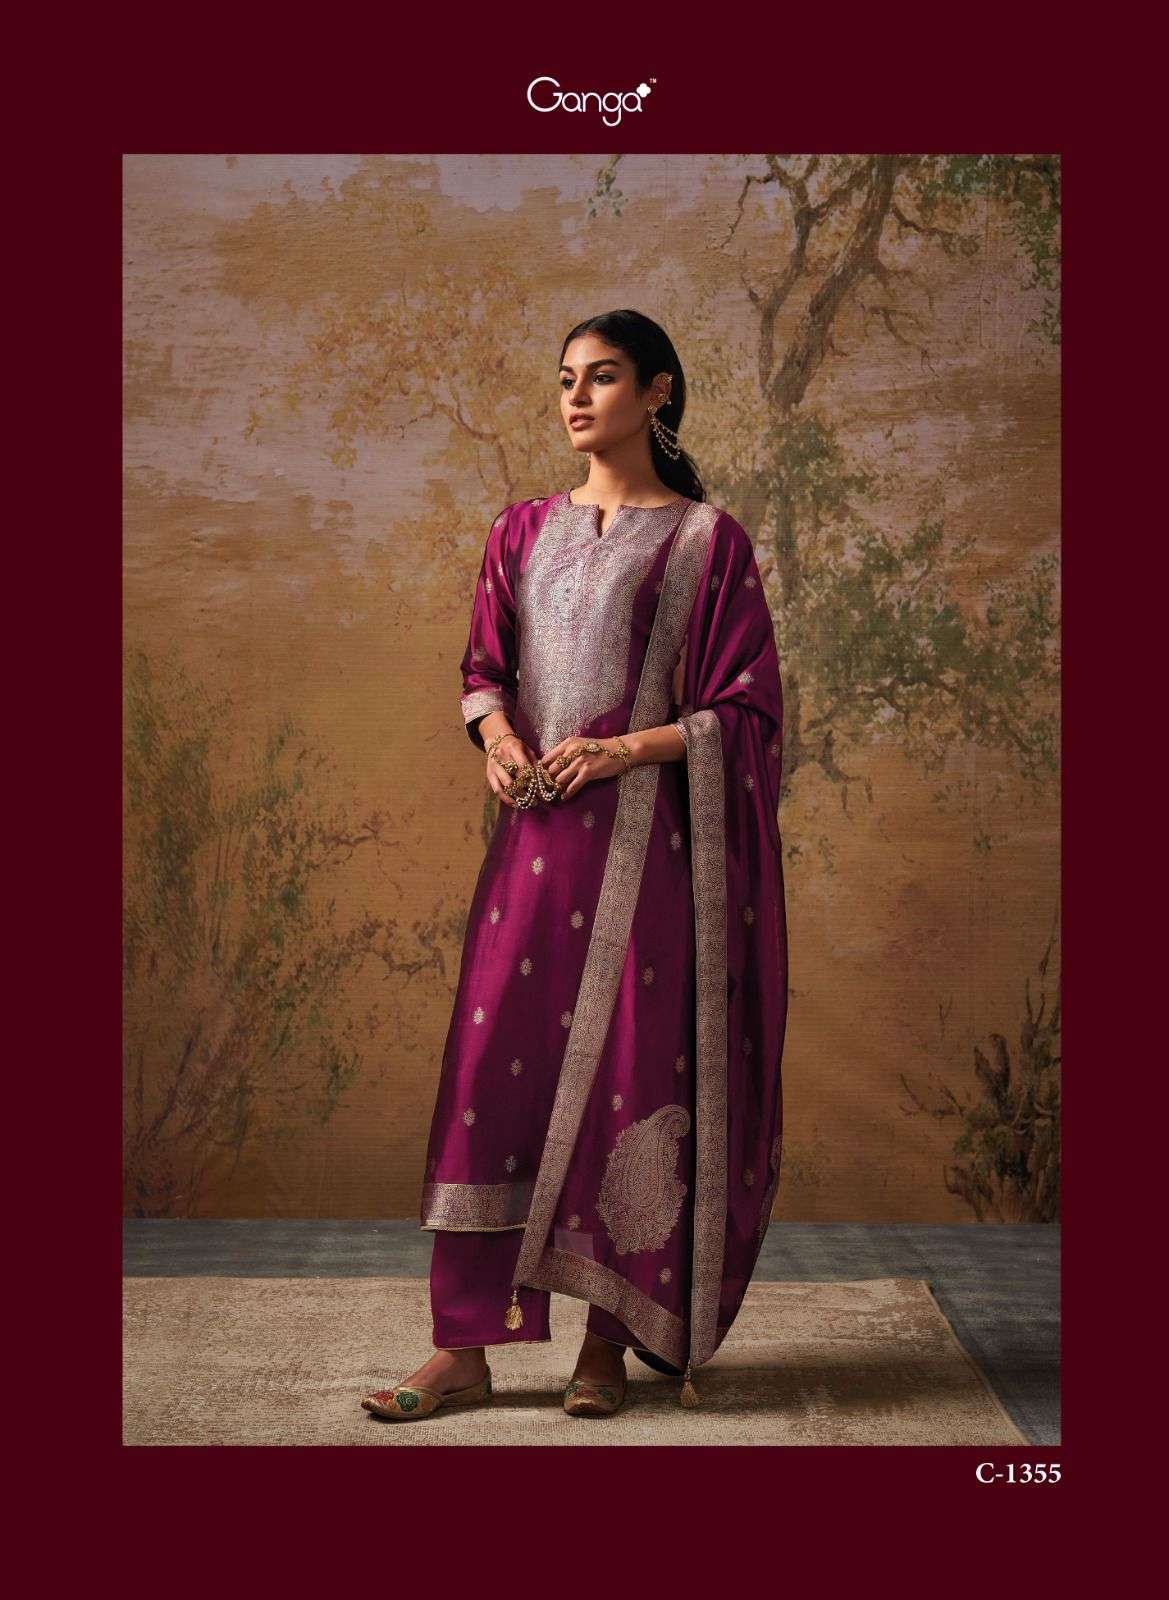 ganga ateet 1355-1360 series party wear designer salwar suits wholesale price surat